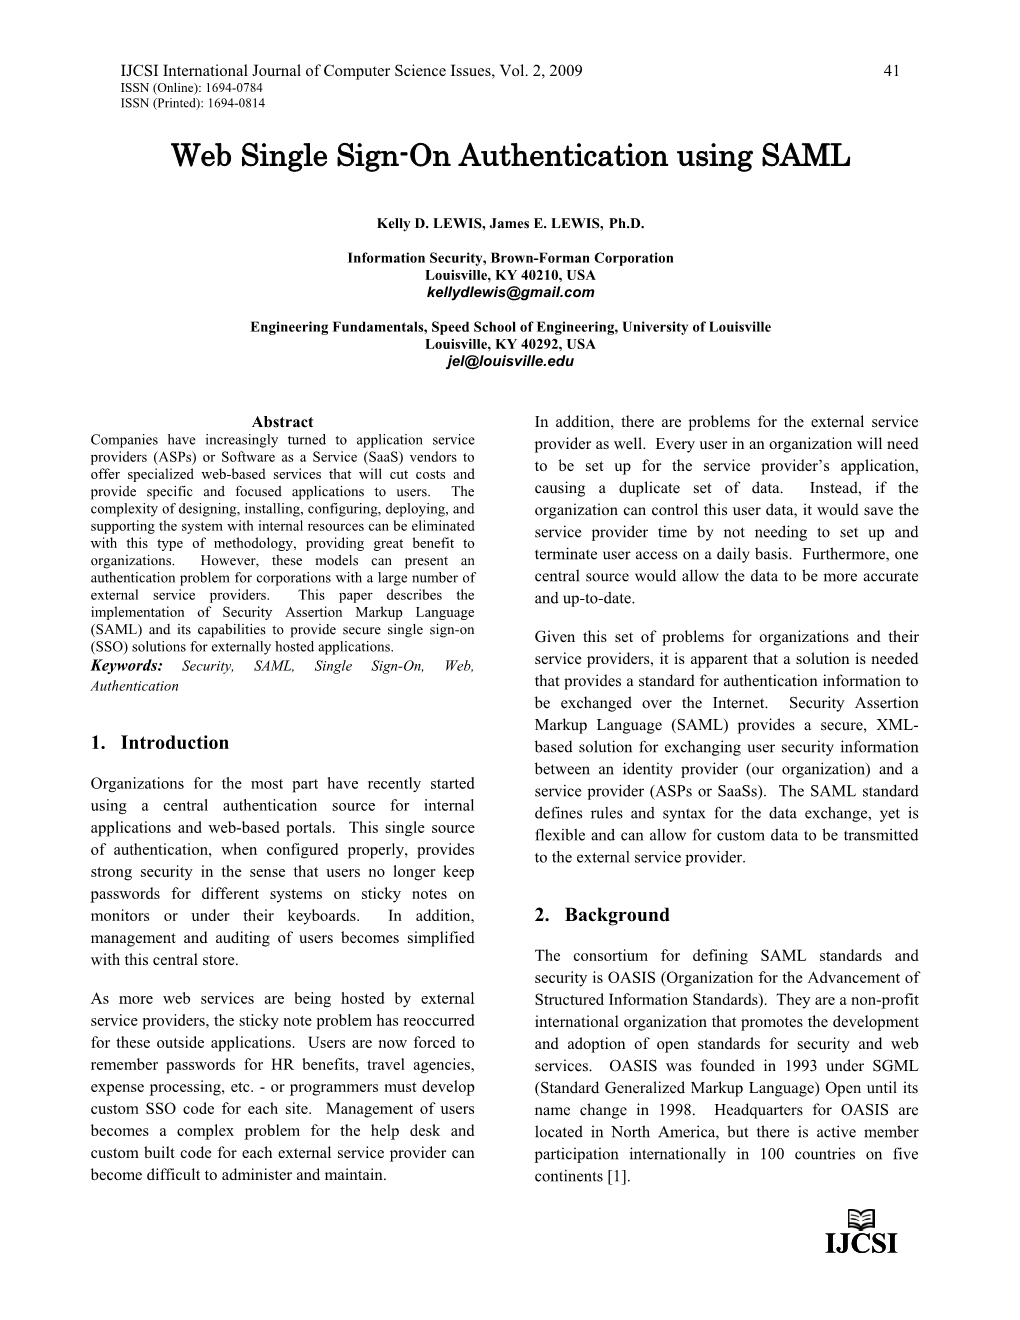 Web Single Sign-On Authentication Using SAML